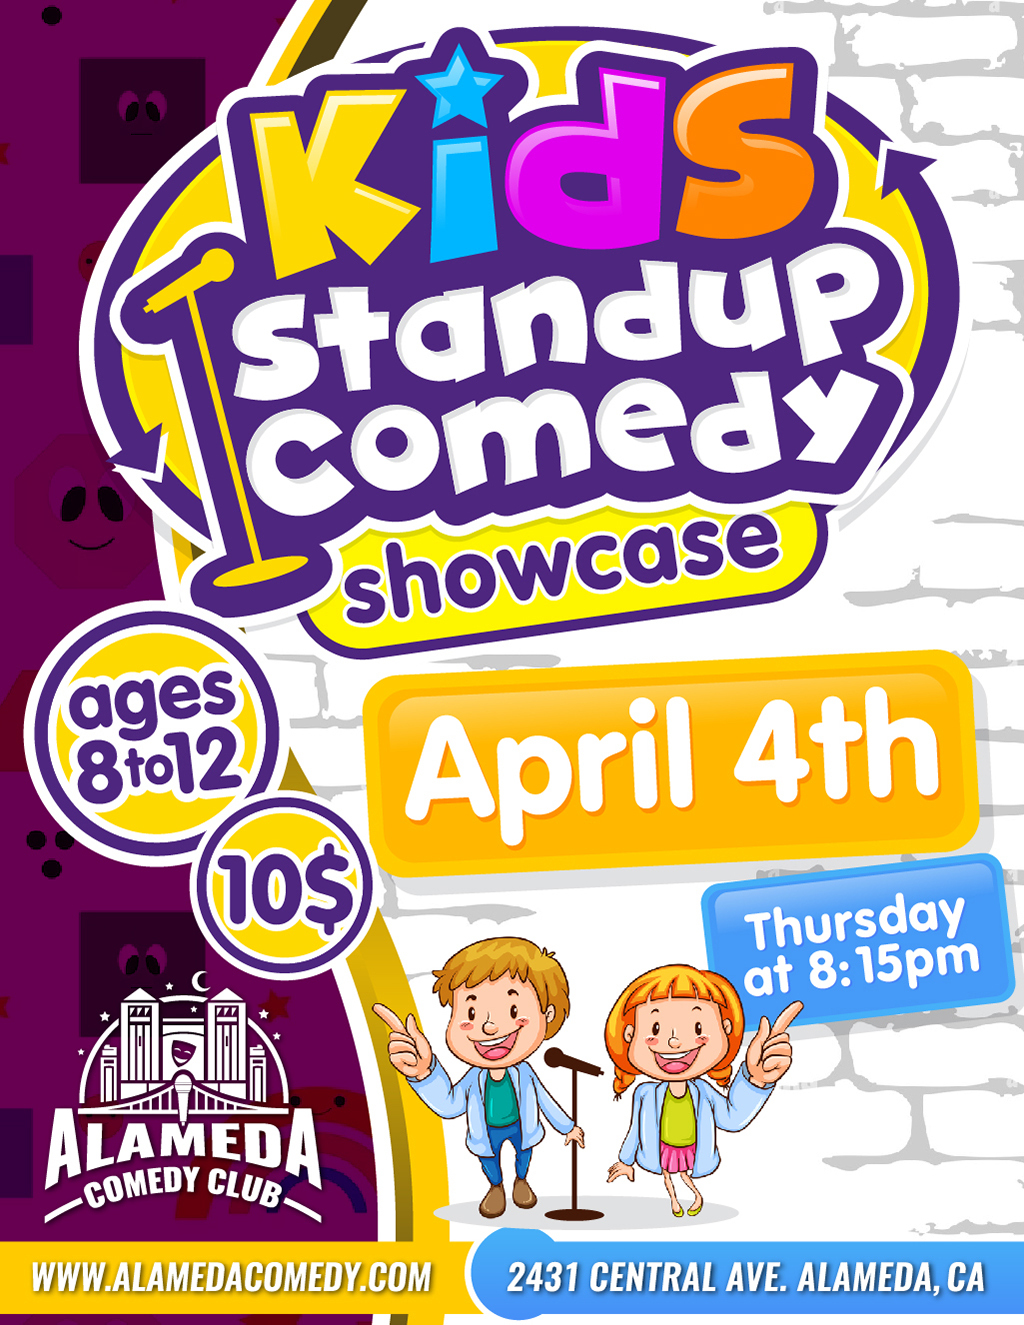 Alameda Comedy Club Upcoming Comedy Showcase at Alameda Comedy Club promotion flier on Digifli com